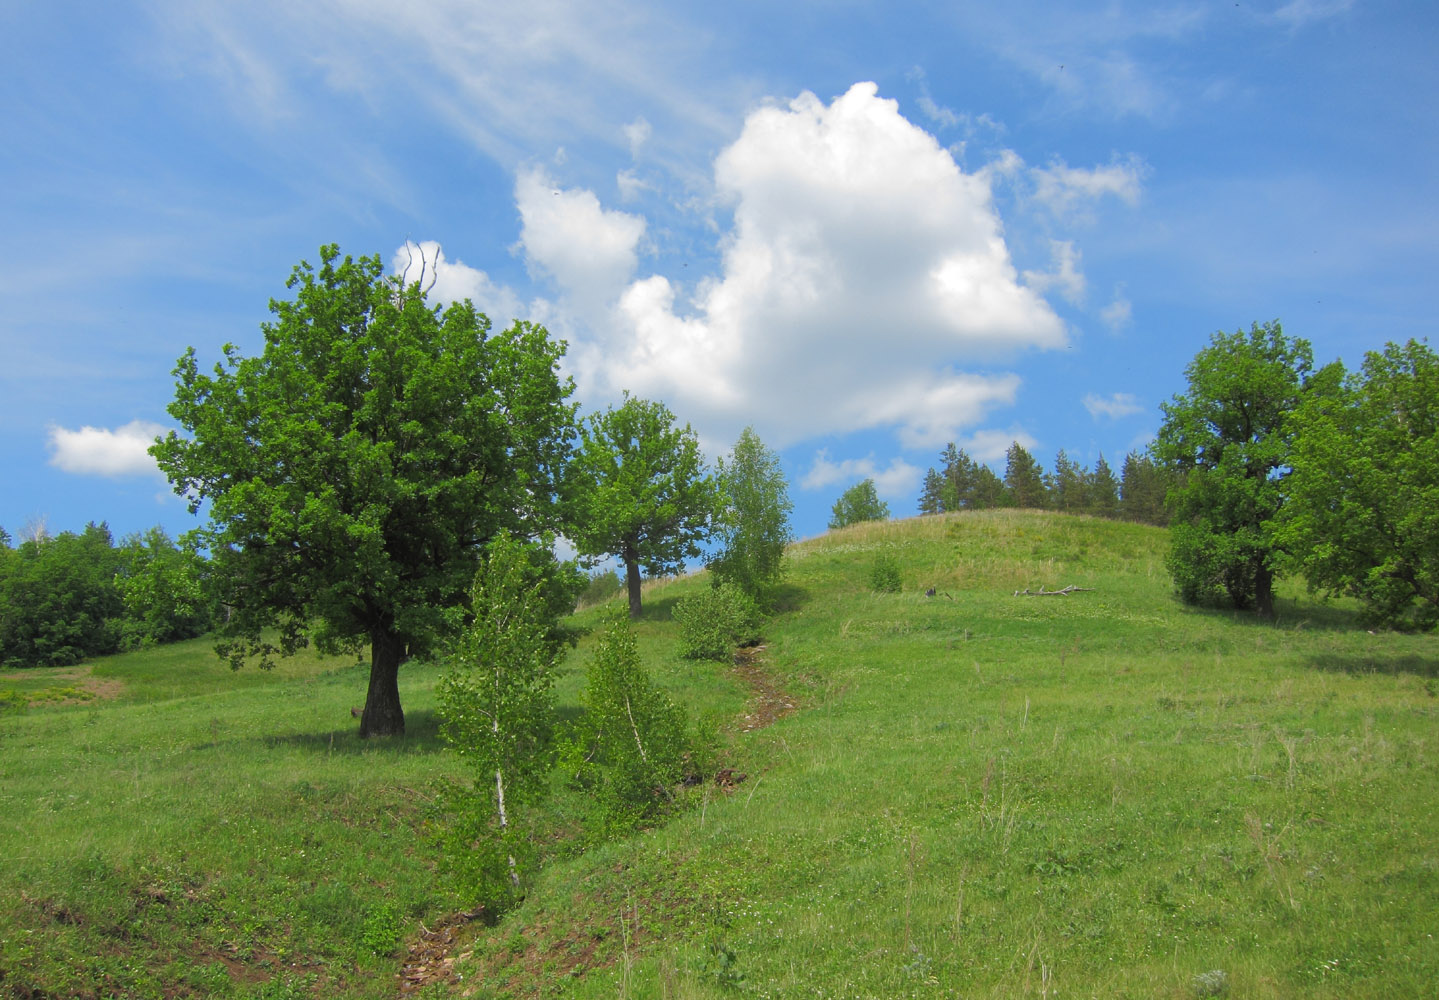 Васькино, image of landscape/habitat.